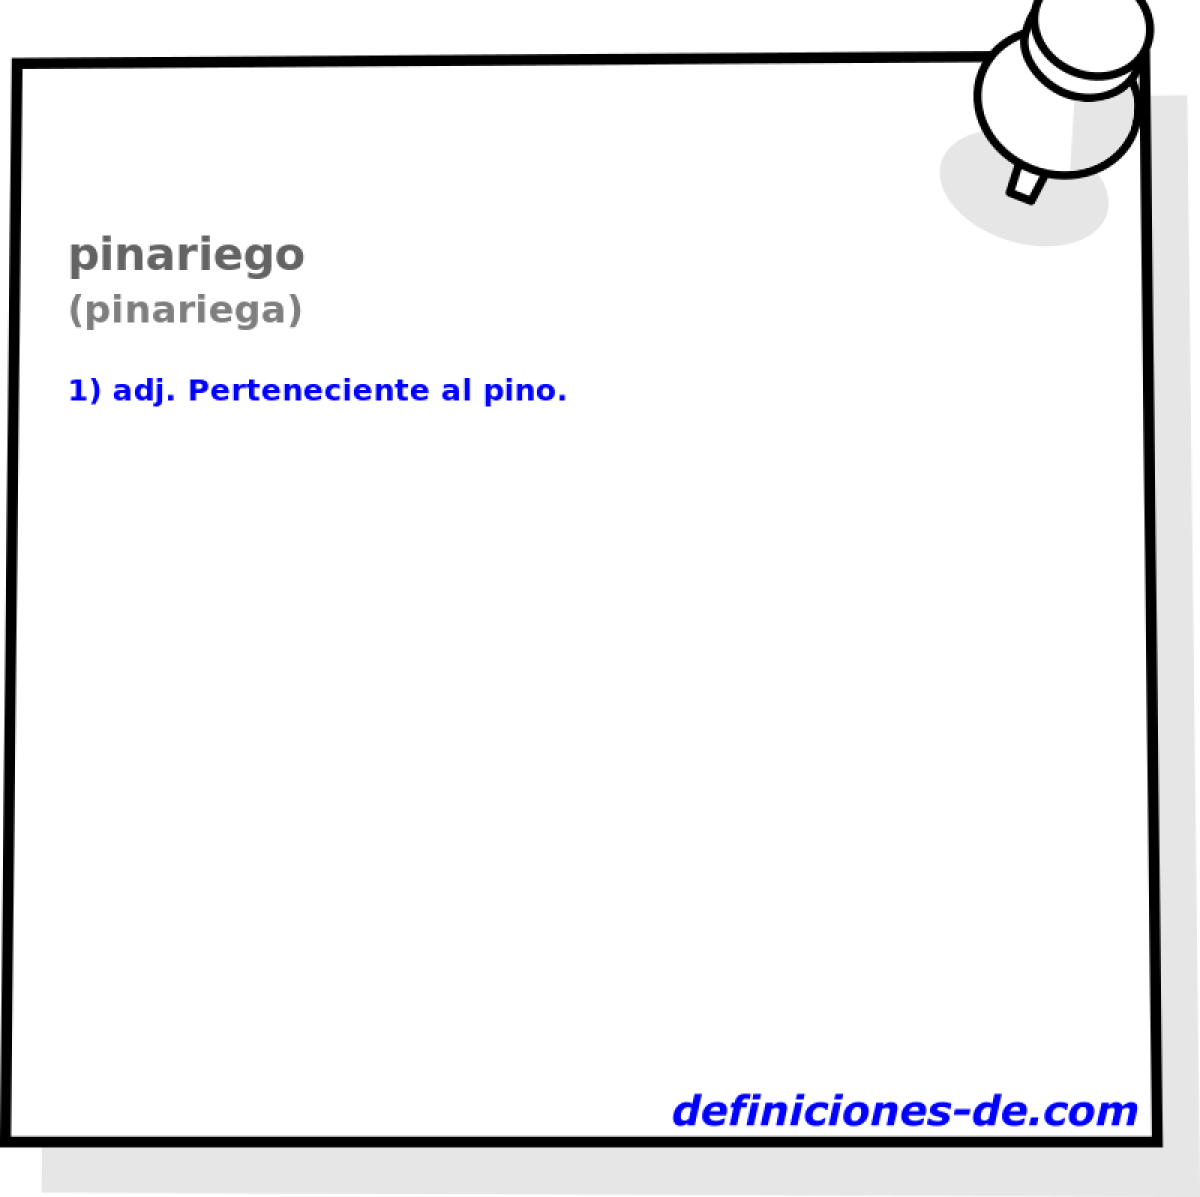 pinariego (pinariega)